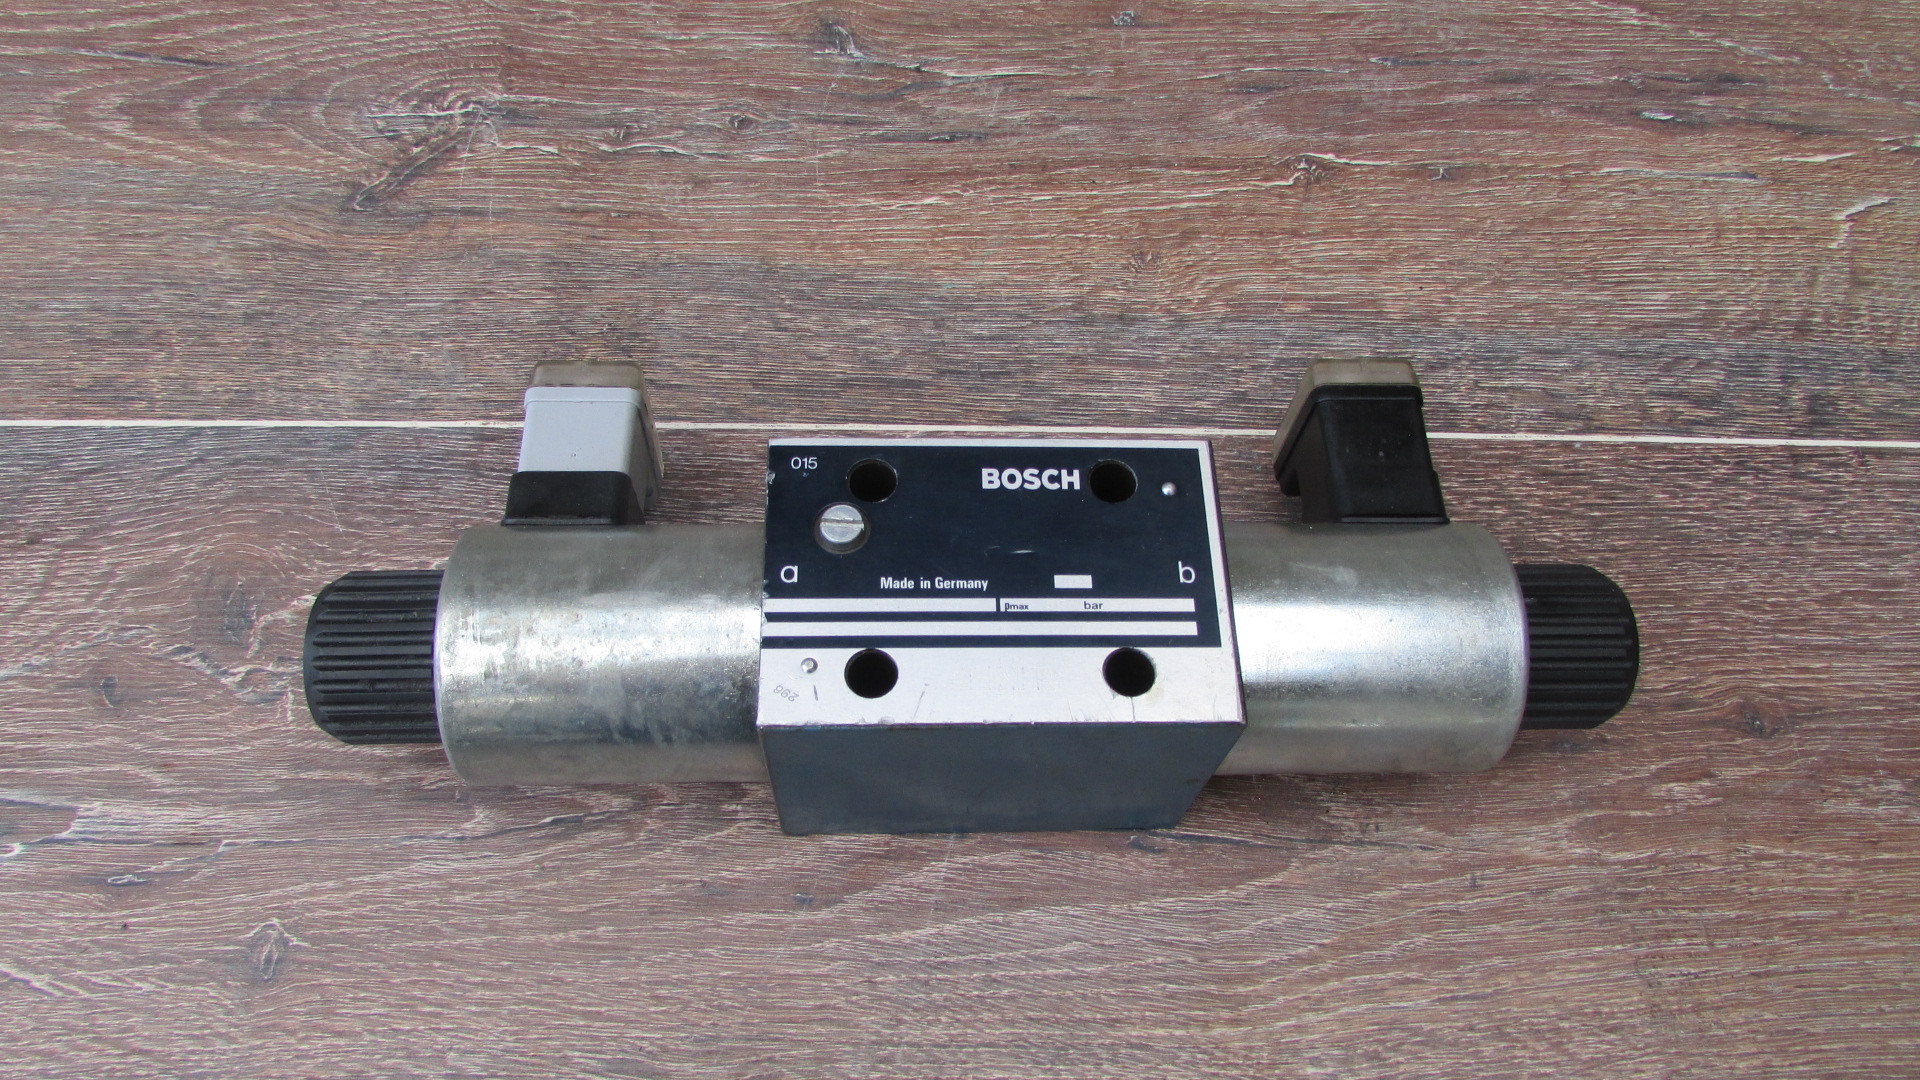 Бош автоматика. Гидравлический клапан Bosch od1532181as000.